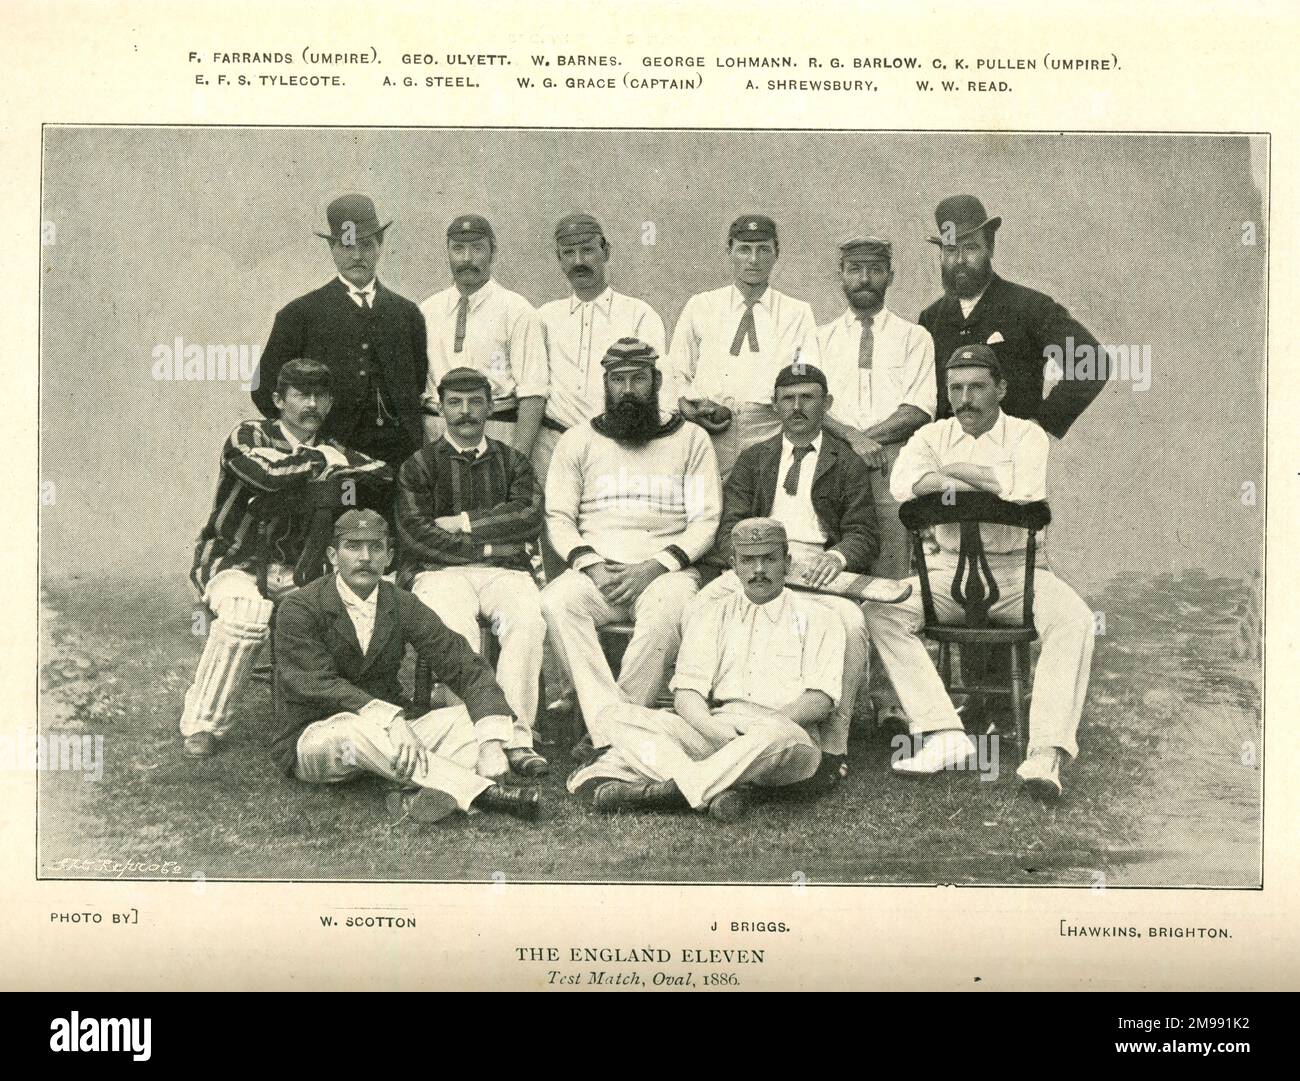 Das England Cricket Team, Oval Test Match, 1886. Stockfoto